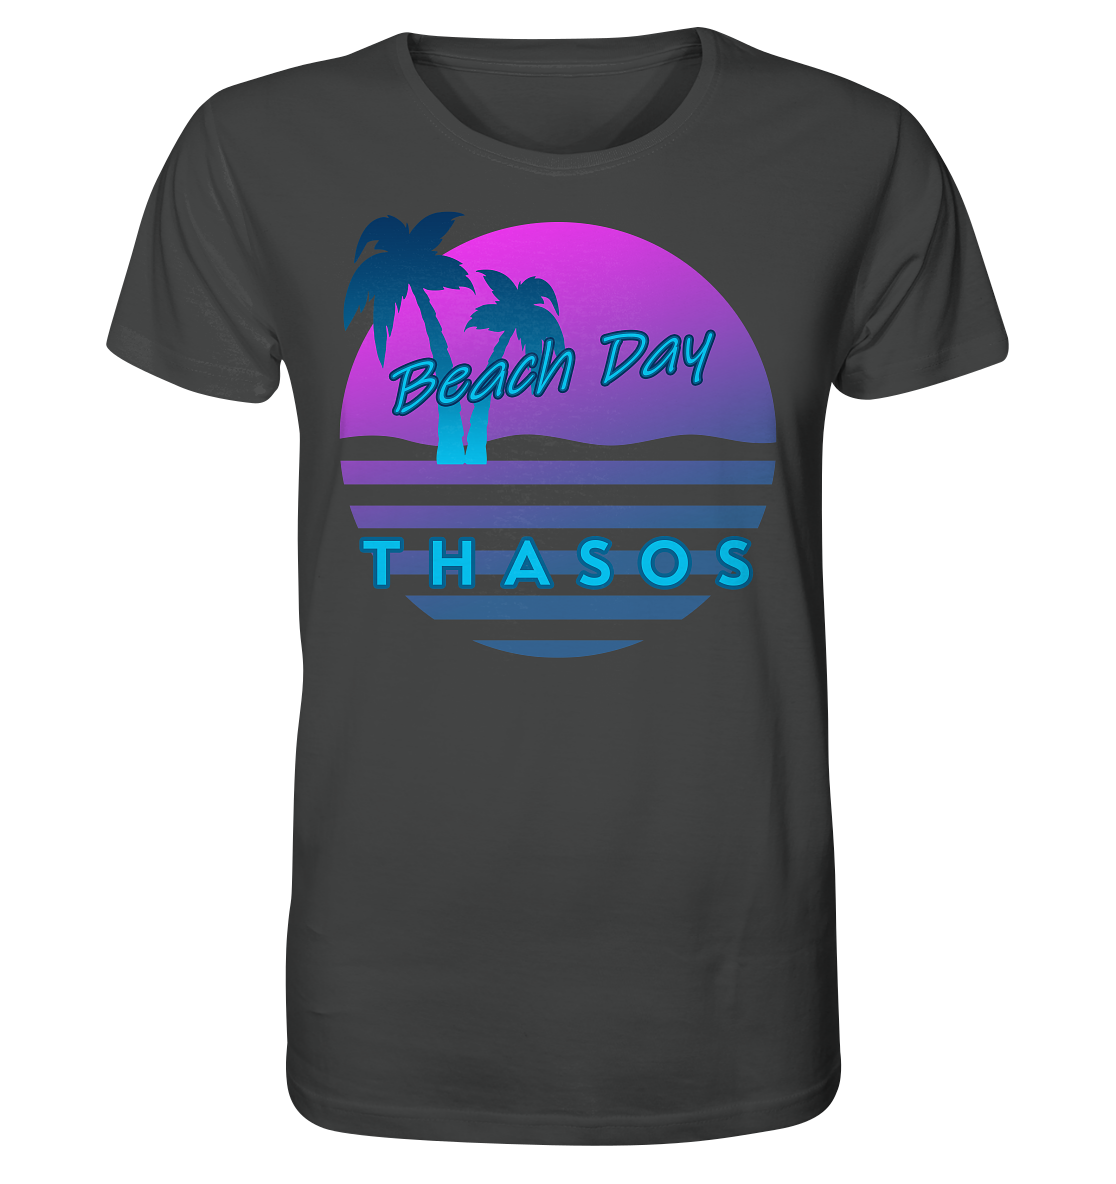 Beach Day Thasos - Organic Shirt